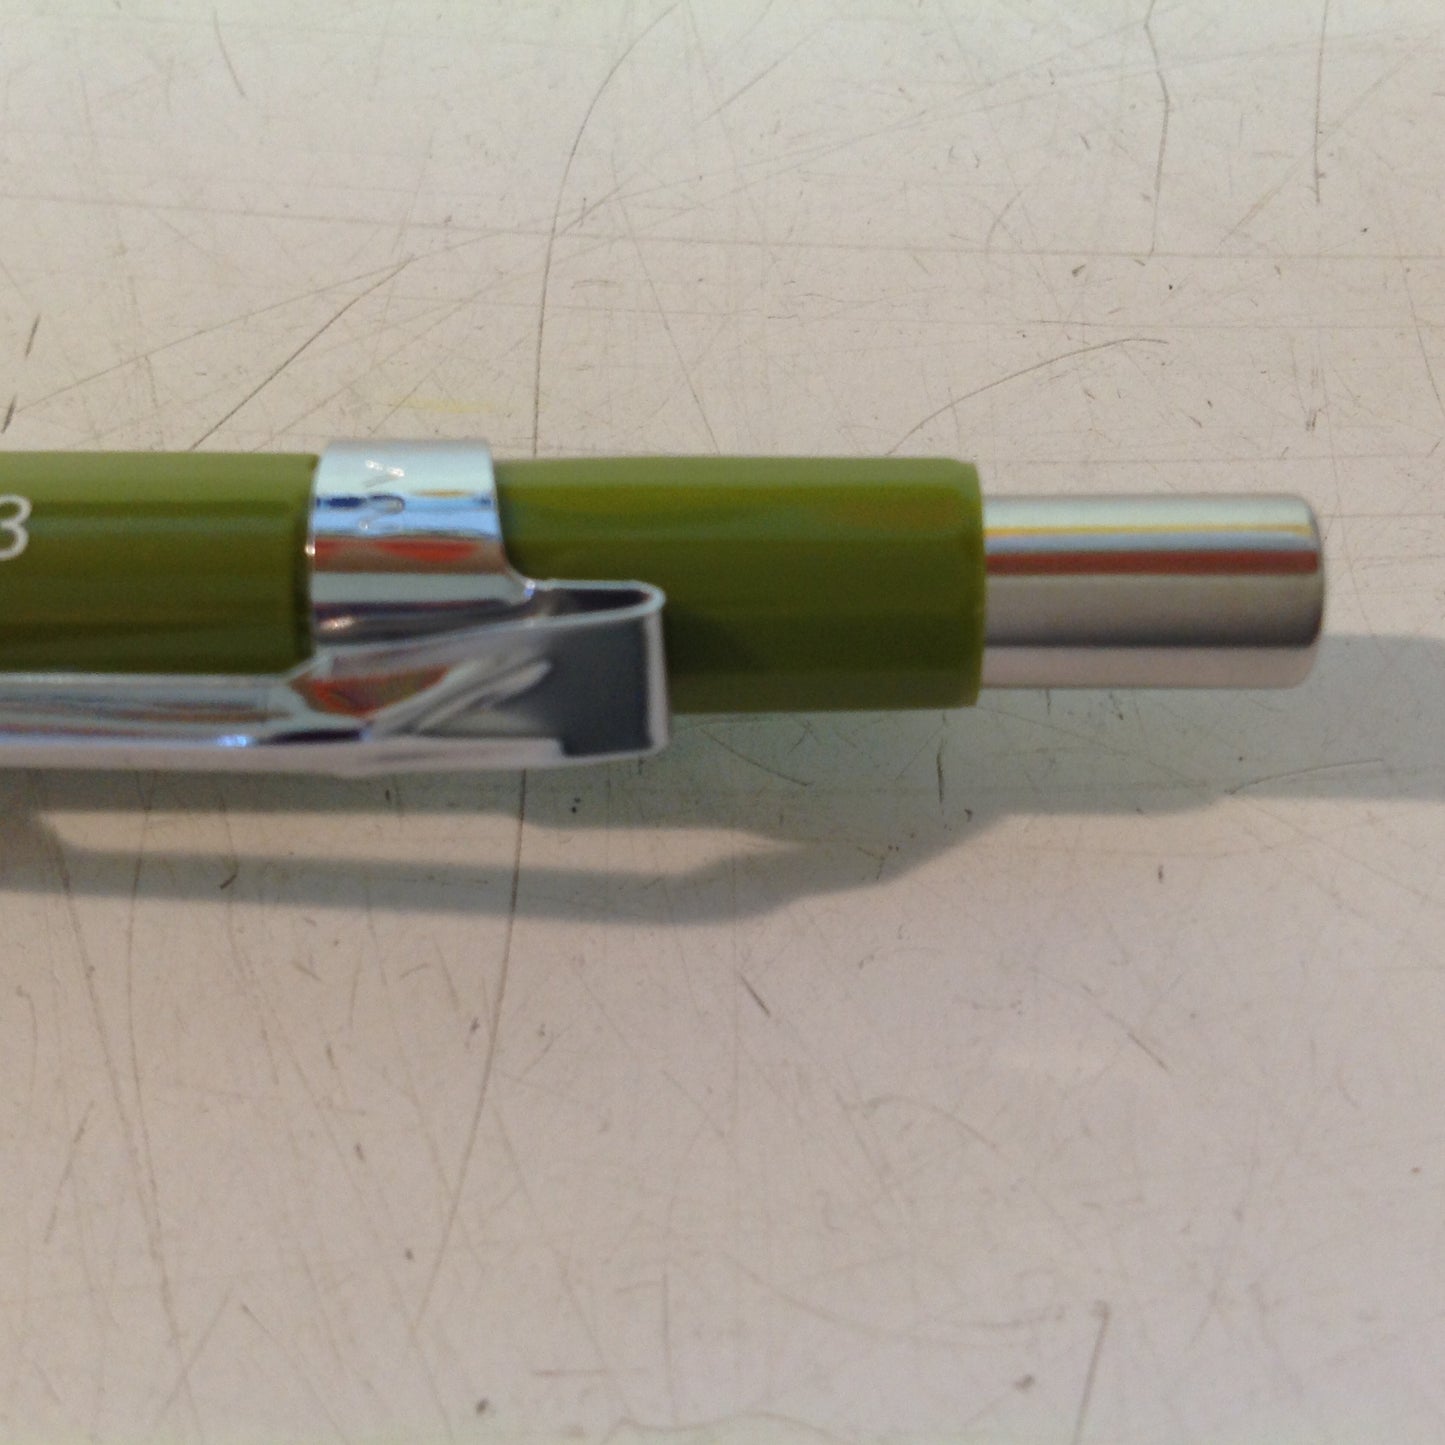 Vintage 1990's NOS Unused 0.3mm Pentel PS523 Mechanical Pencil